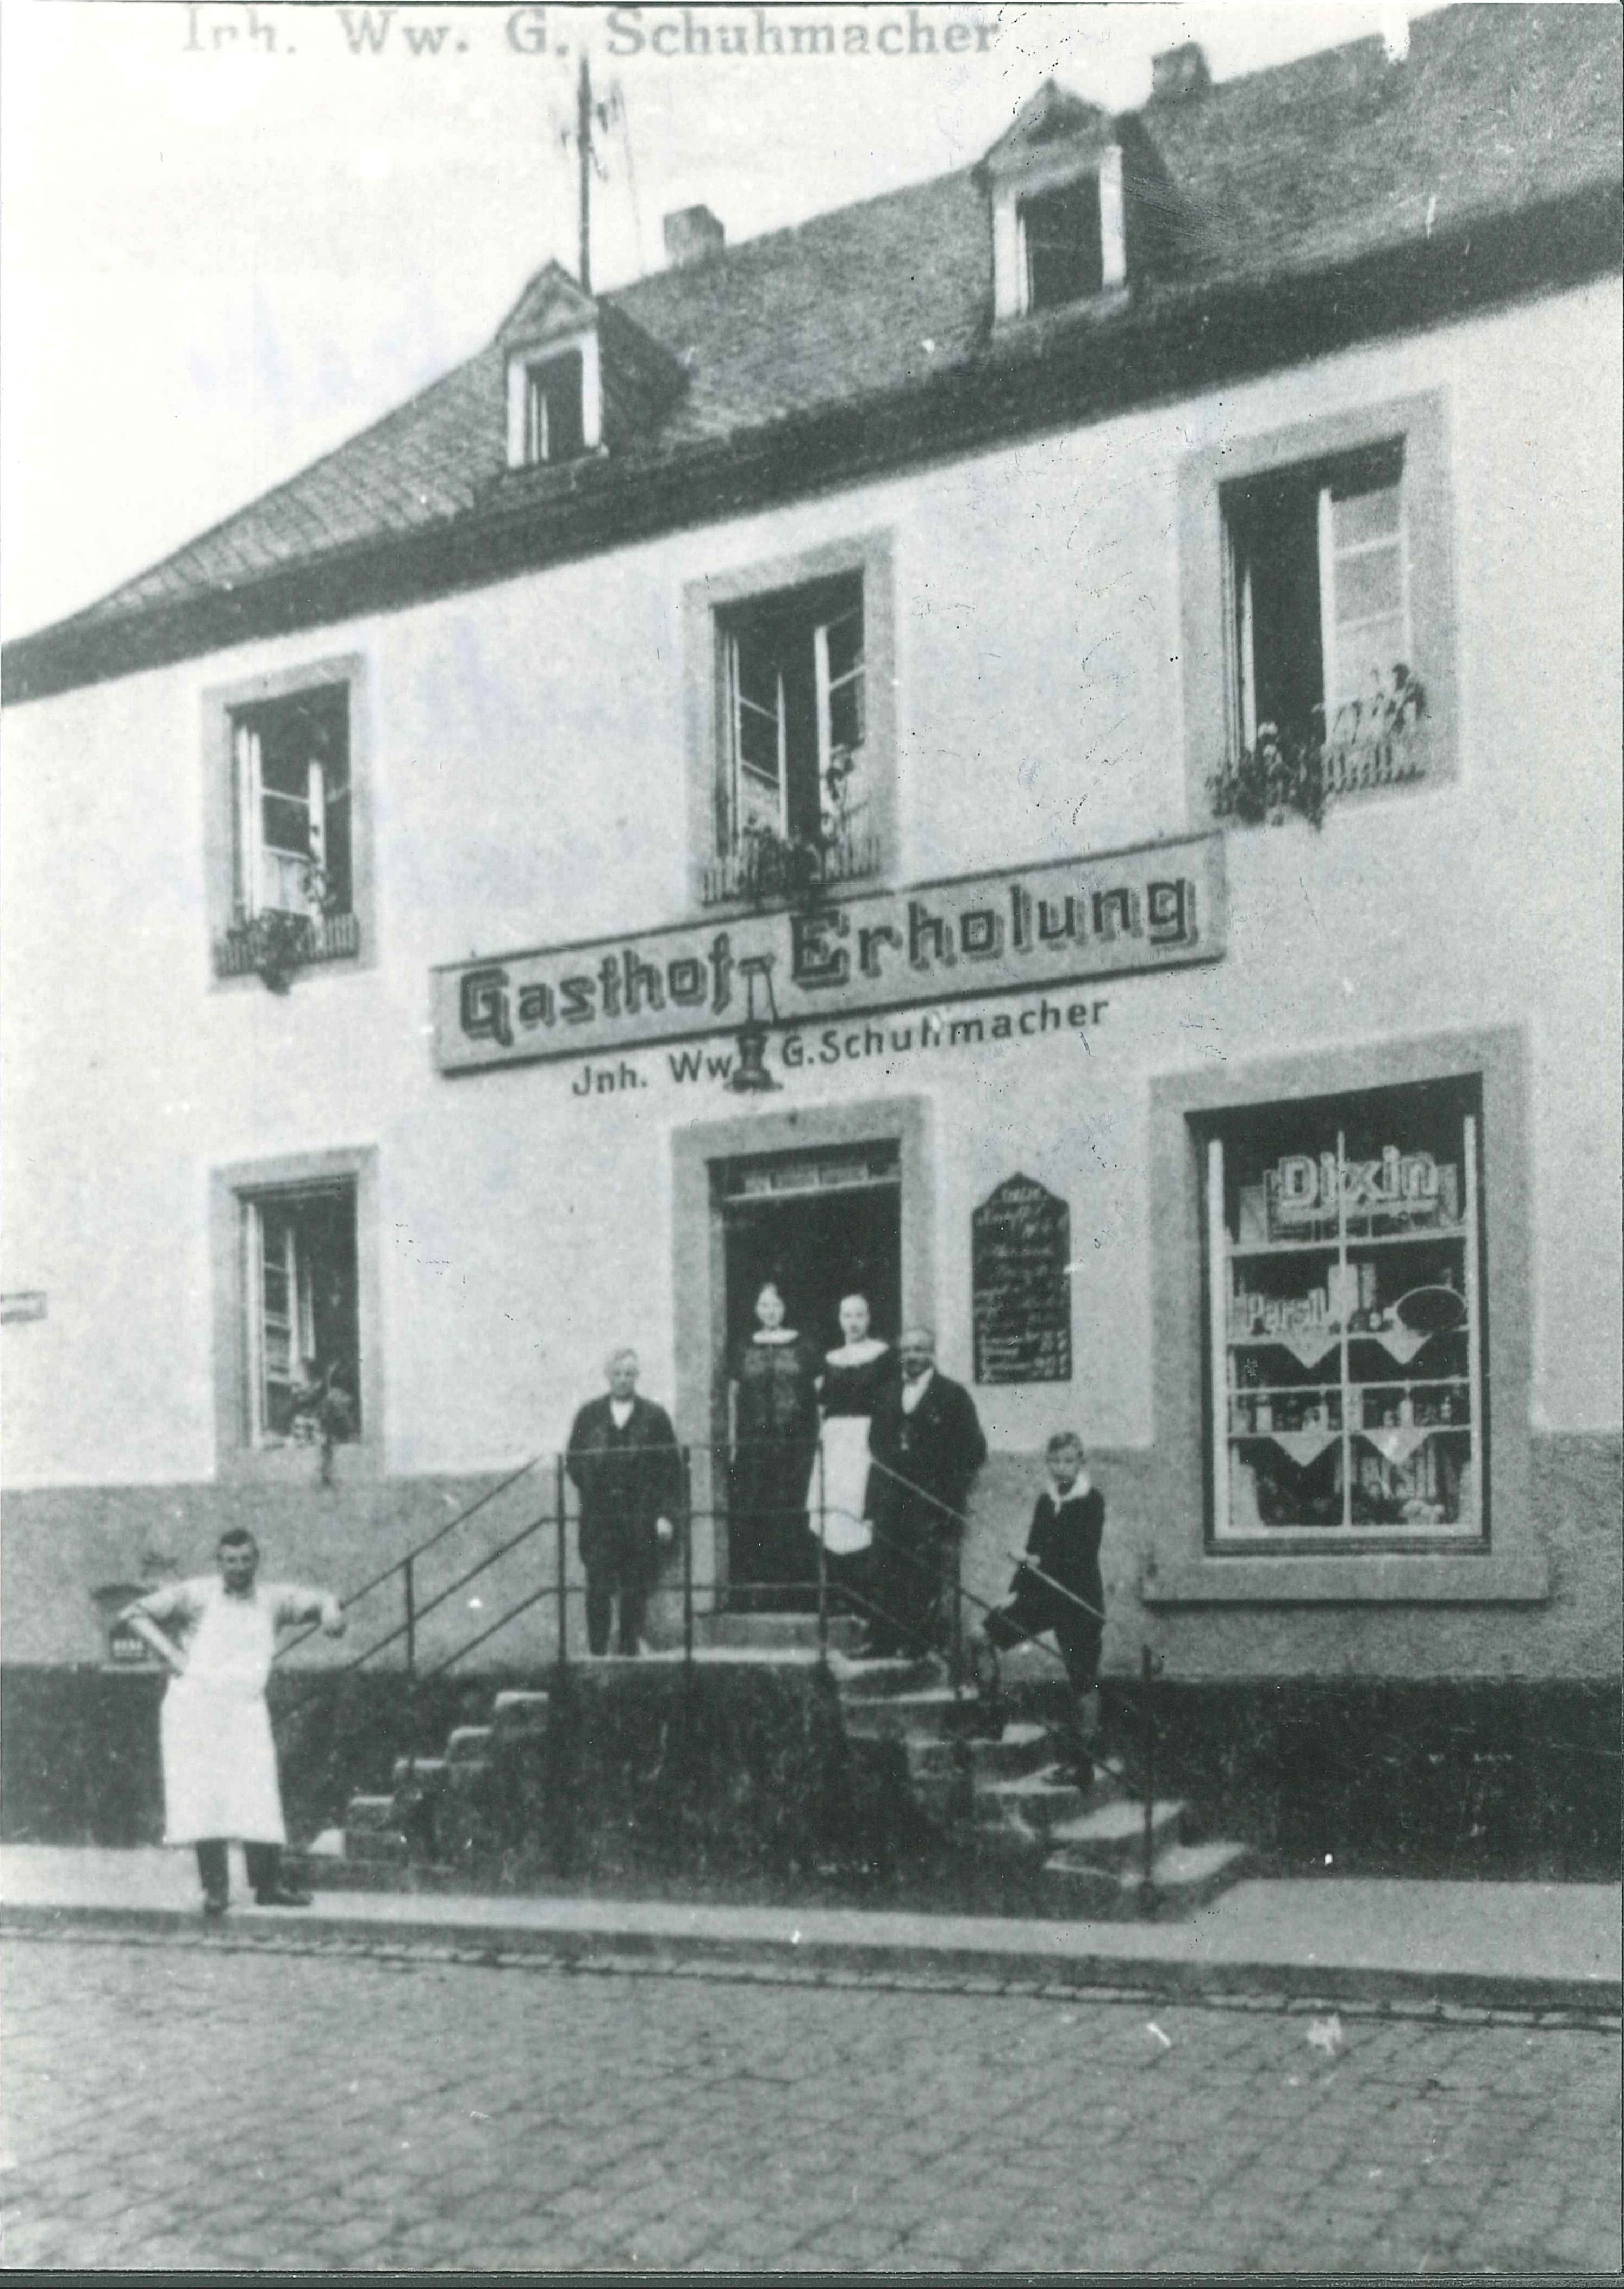 Gasthof "Erholung" in Bendorf, 1930 (REM CC BY-NC-SA)